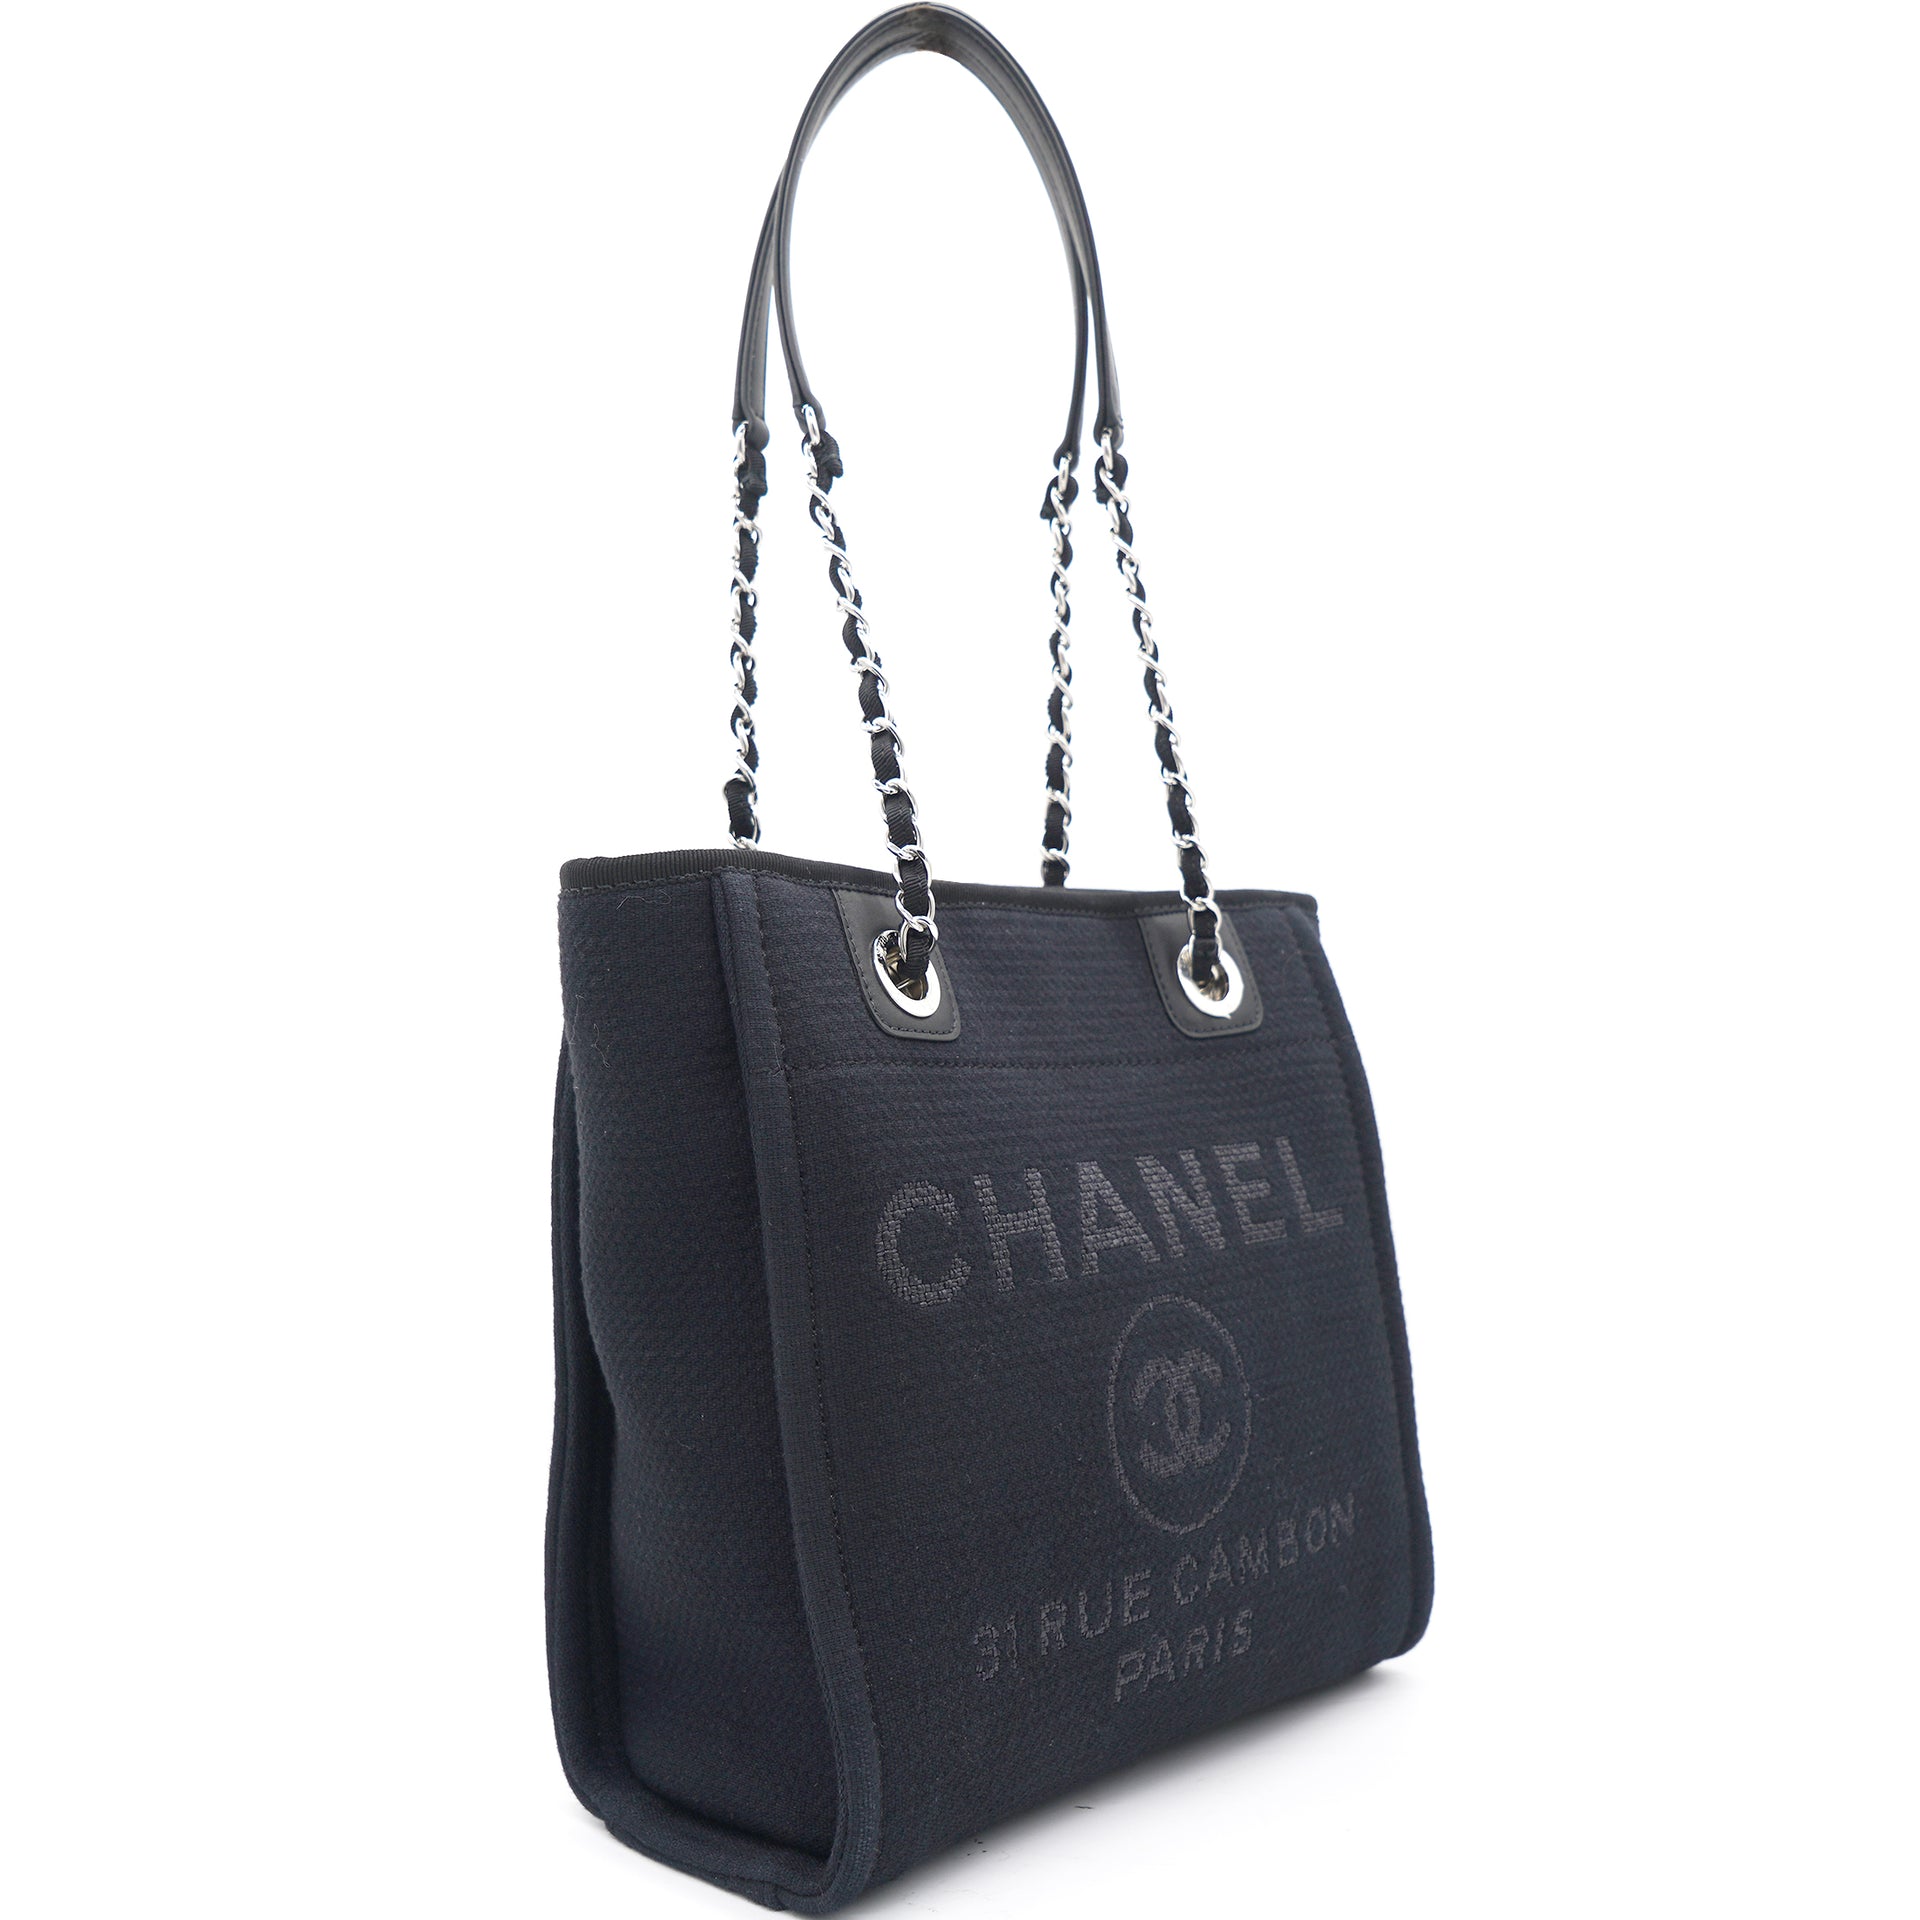 22s Chanel Deauville Small Tote (Beige & Black)